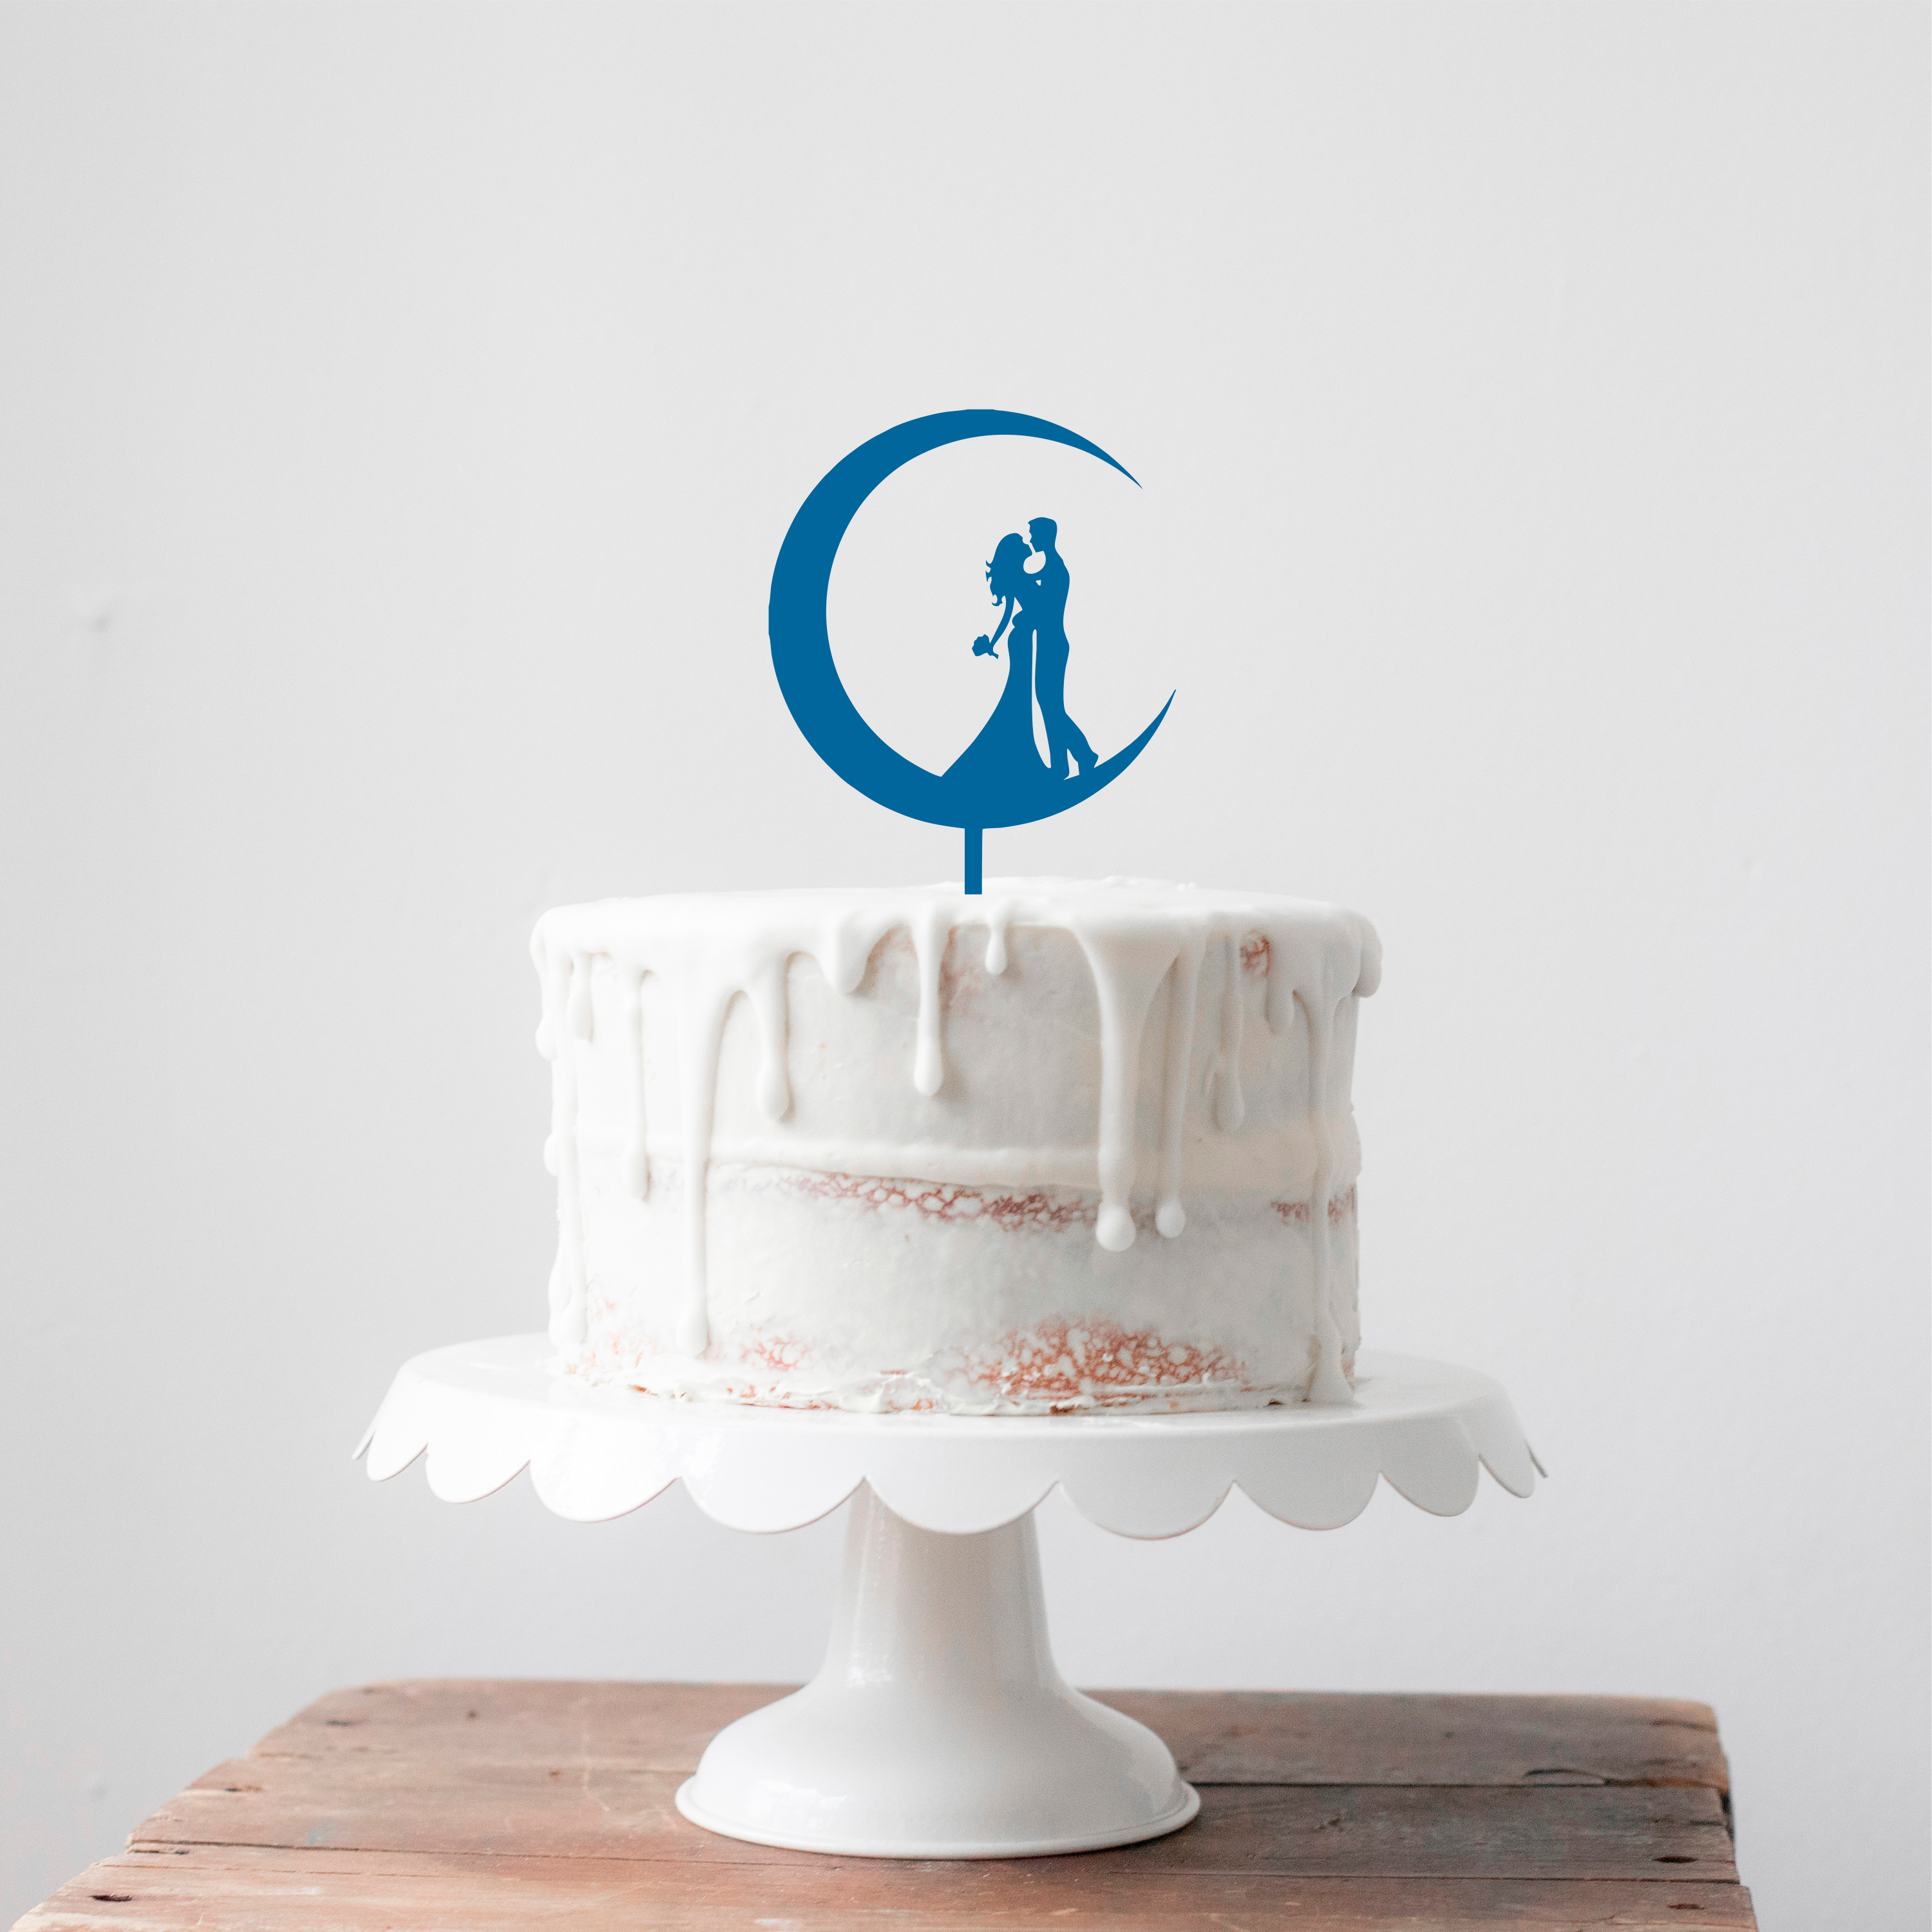 Moon Cake Topper - Wood (MDF) or Acrylic - Wood Cake Topper - Acrylic Cake Topper - Wedding - Cake - Topper - Option 2